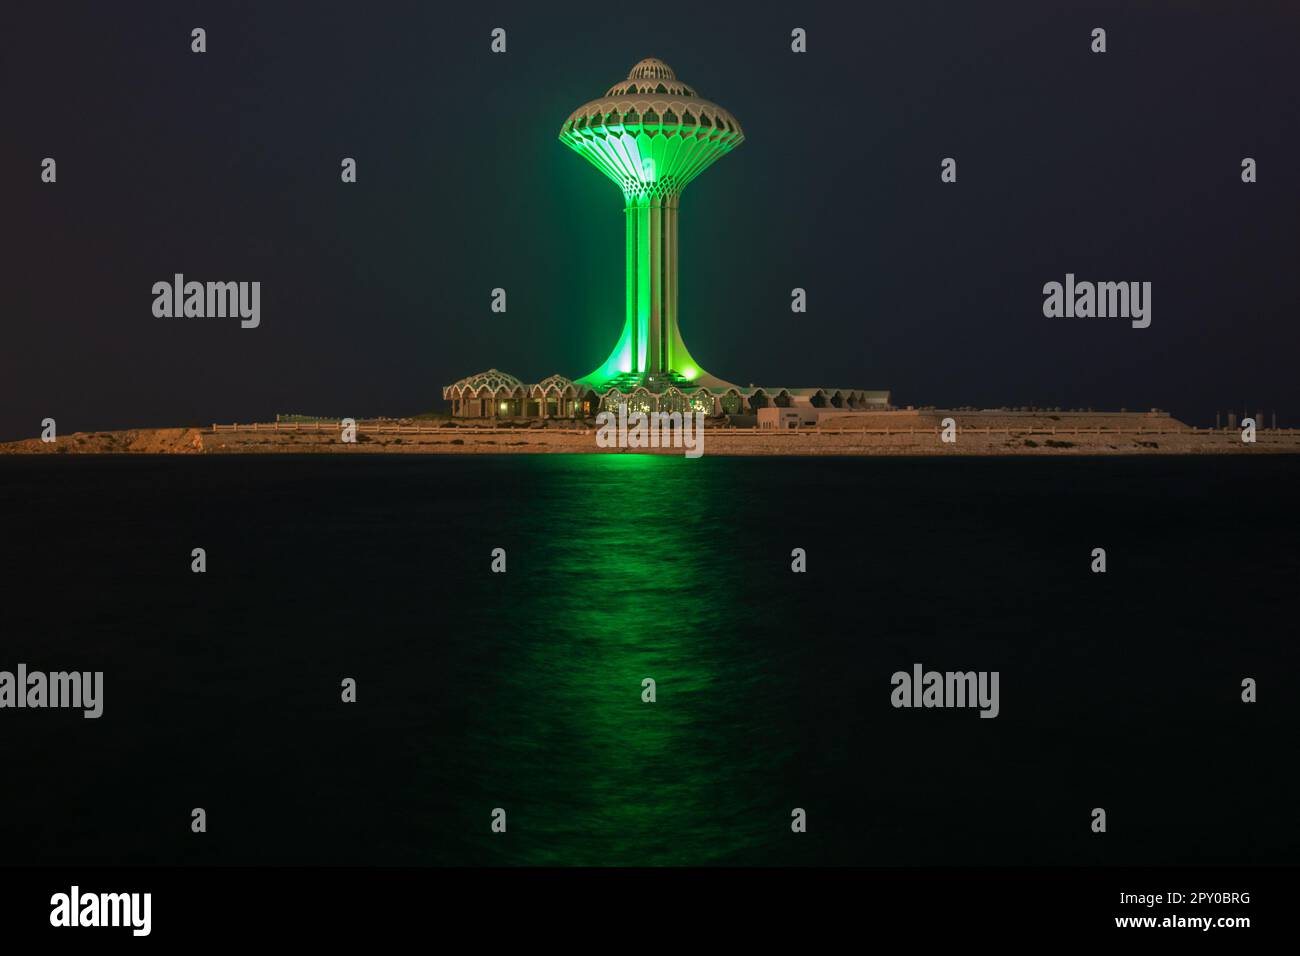 Al Khobar water tower illuminated in green during the night on the sea shore, Dammam, Saudi Arabia Stock Photo